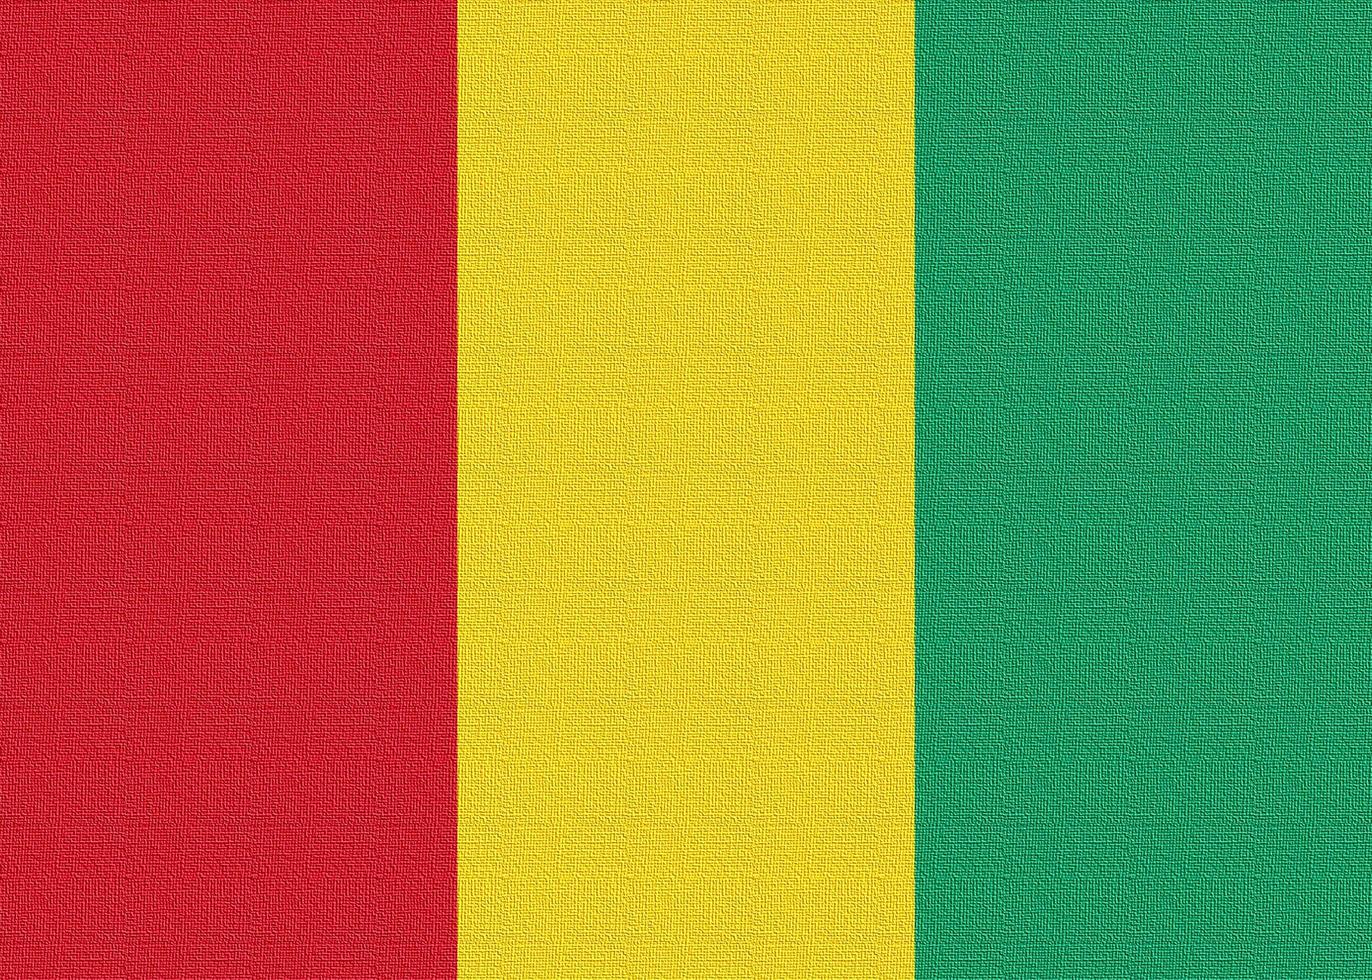 Illustration of the national flag of Guinea photo